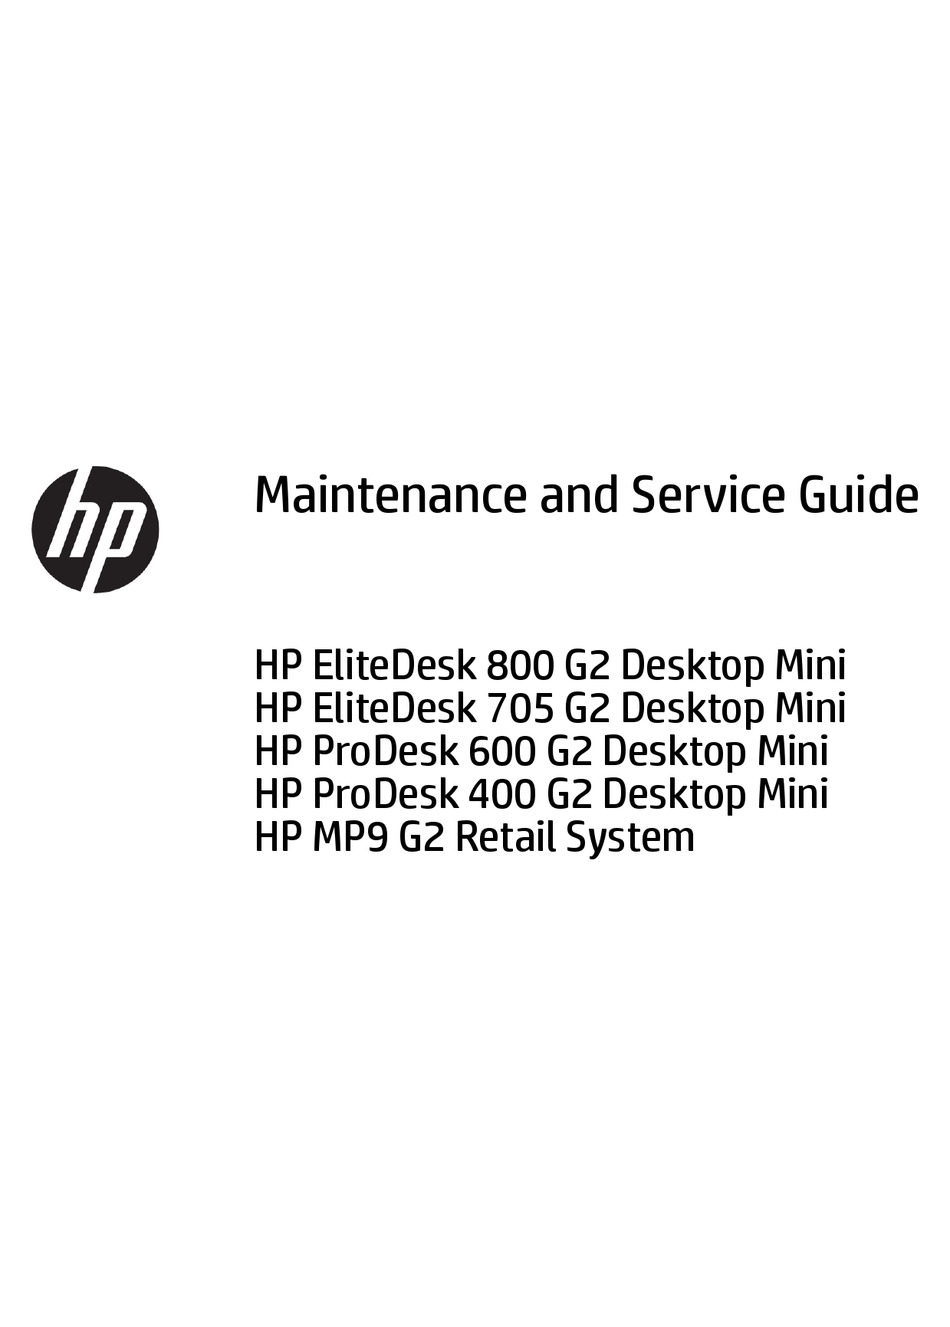 Hp Elitedesk 800 G2 Desktop Mini Maintenance And Service Manual Pdf Download Manualslib